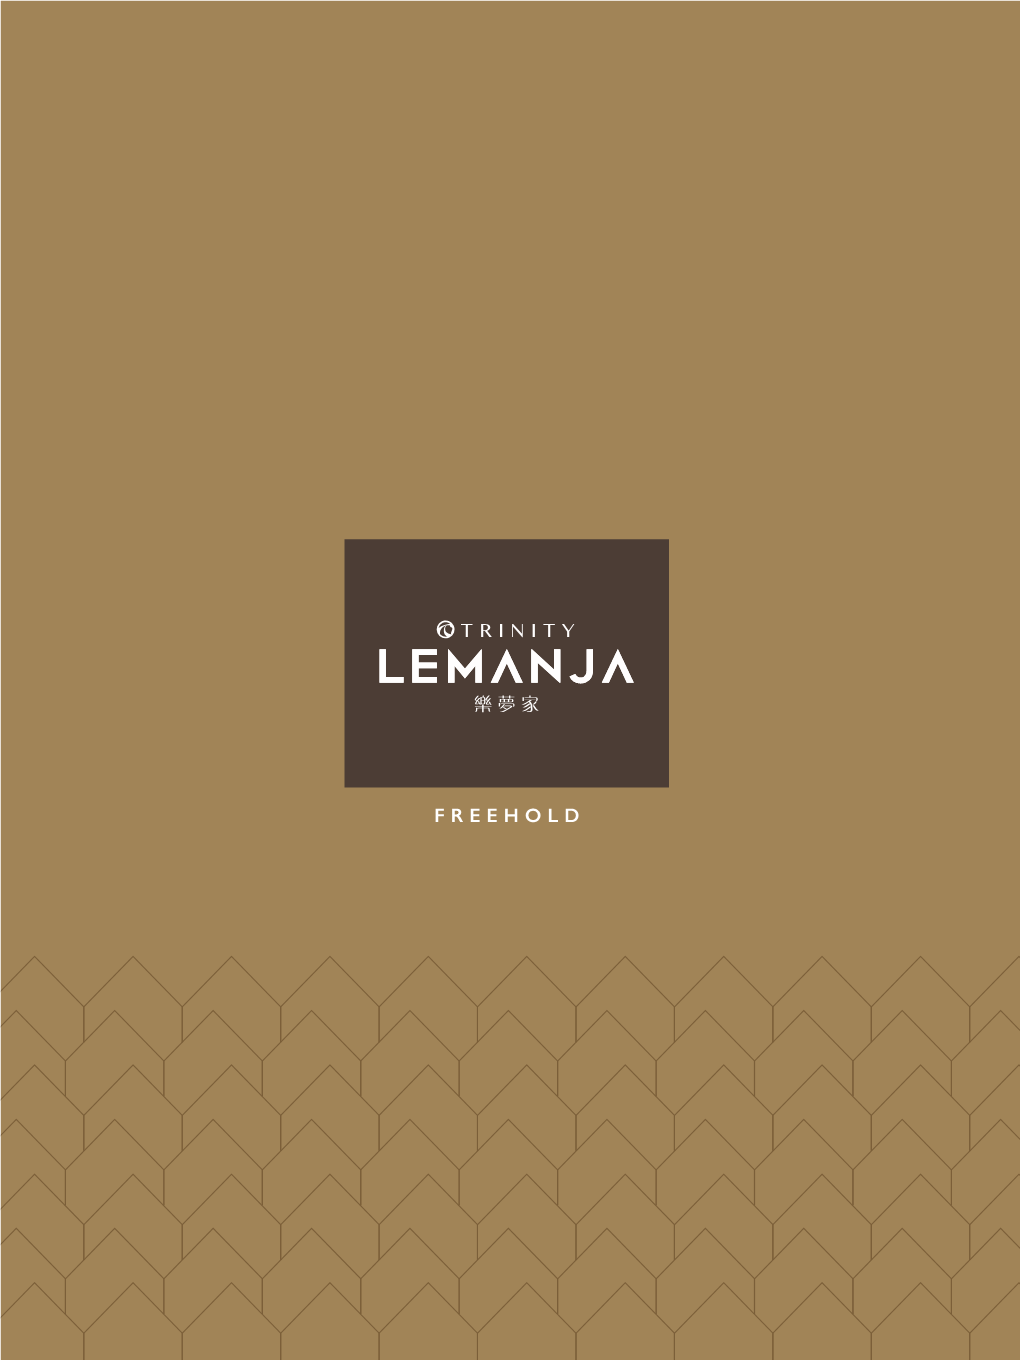 Lemanja-Brochure.Pdf